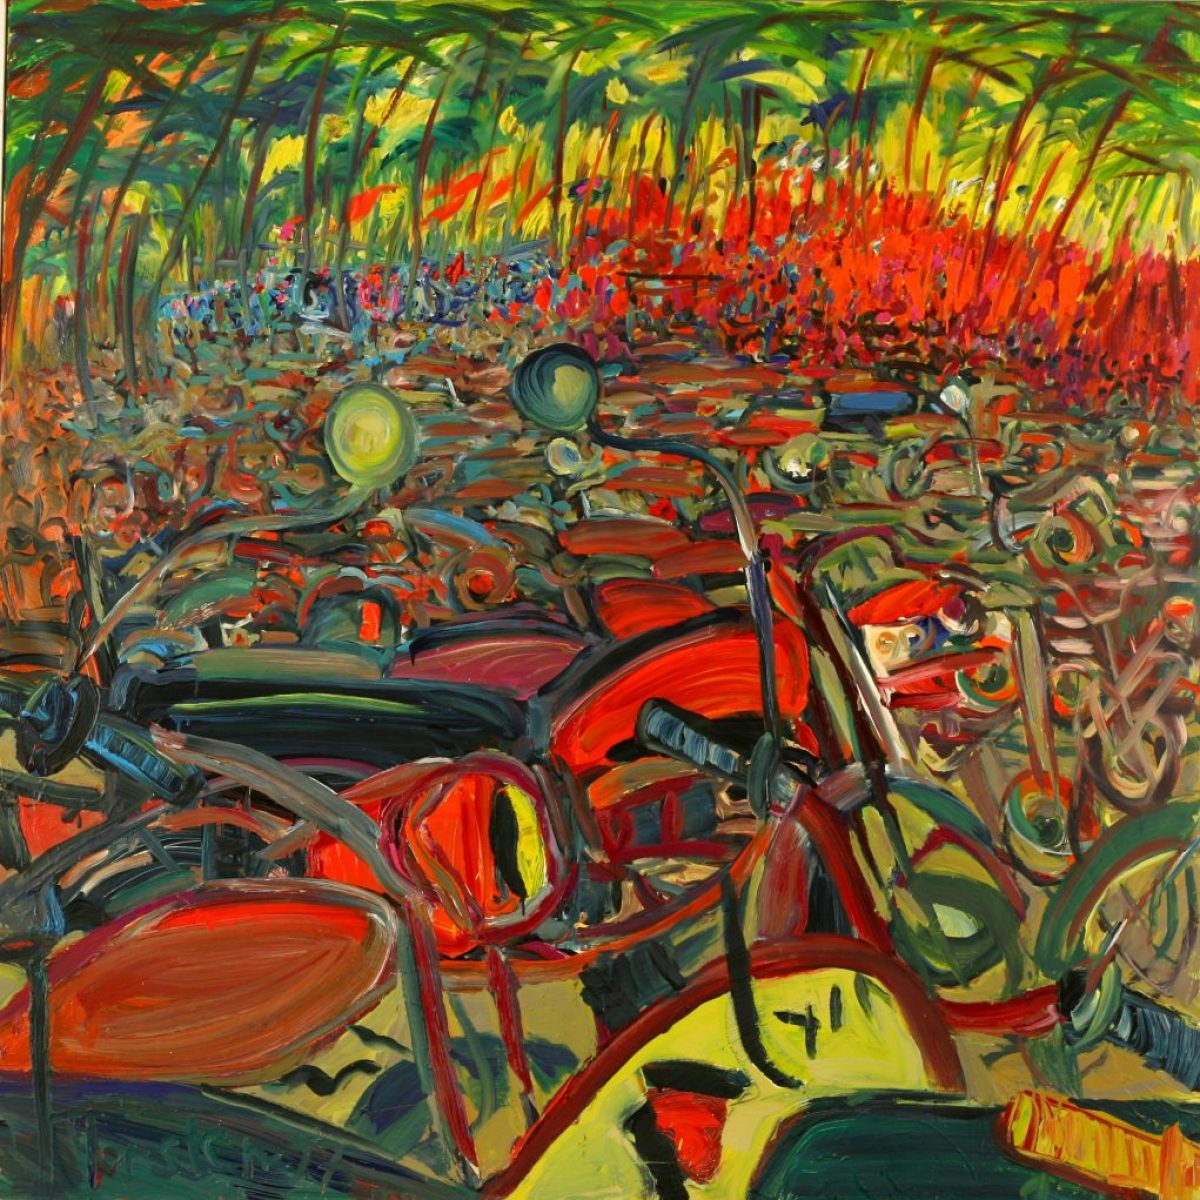 Torsten Schlüter, "Moksha and Enfields", 1997, Öl auf Leinwand, 180x180cm